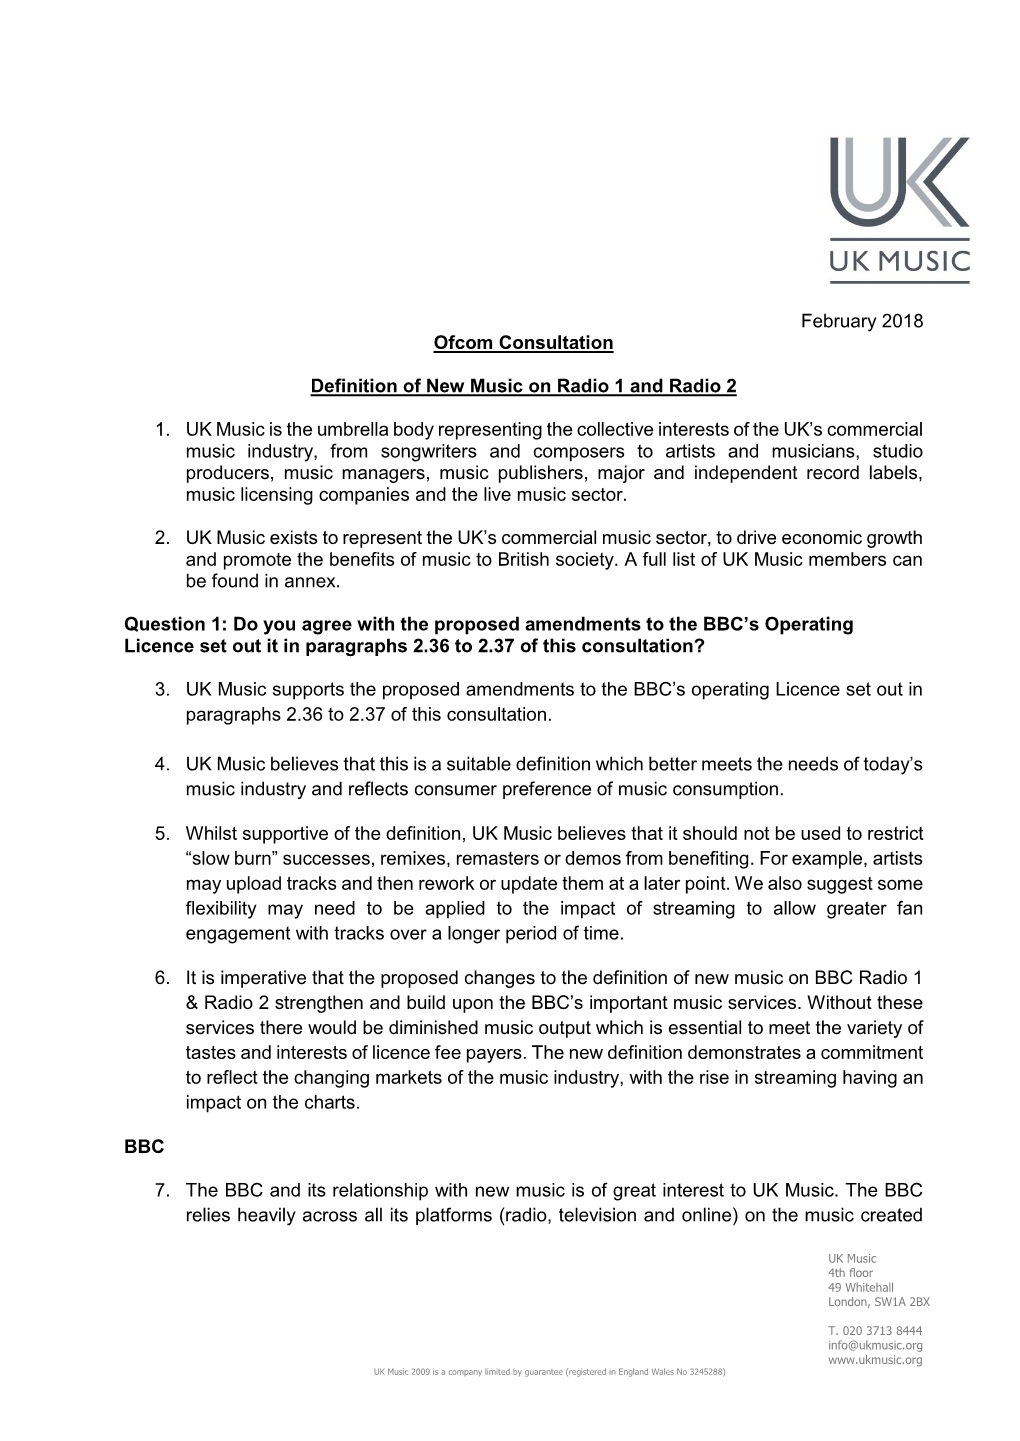 UK Music's Response to the New Music Consultation